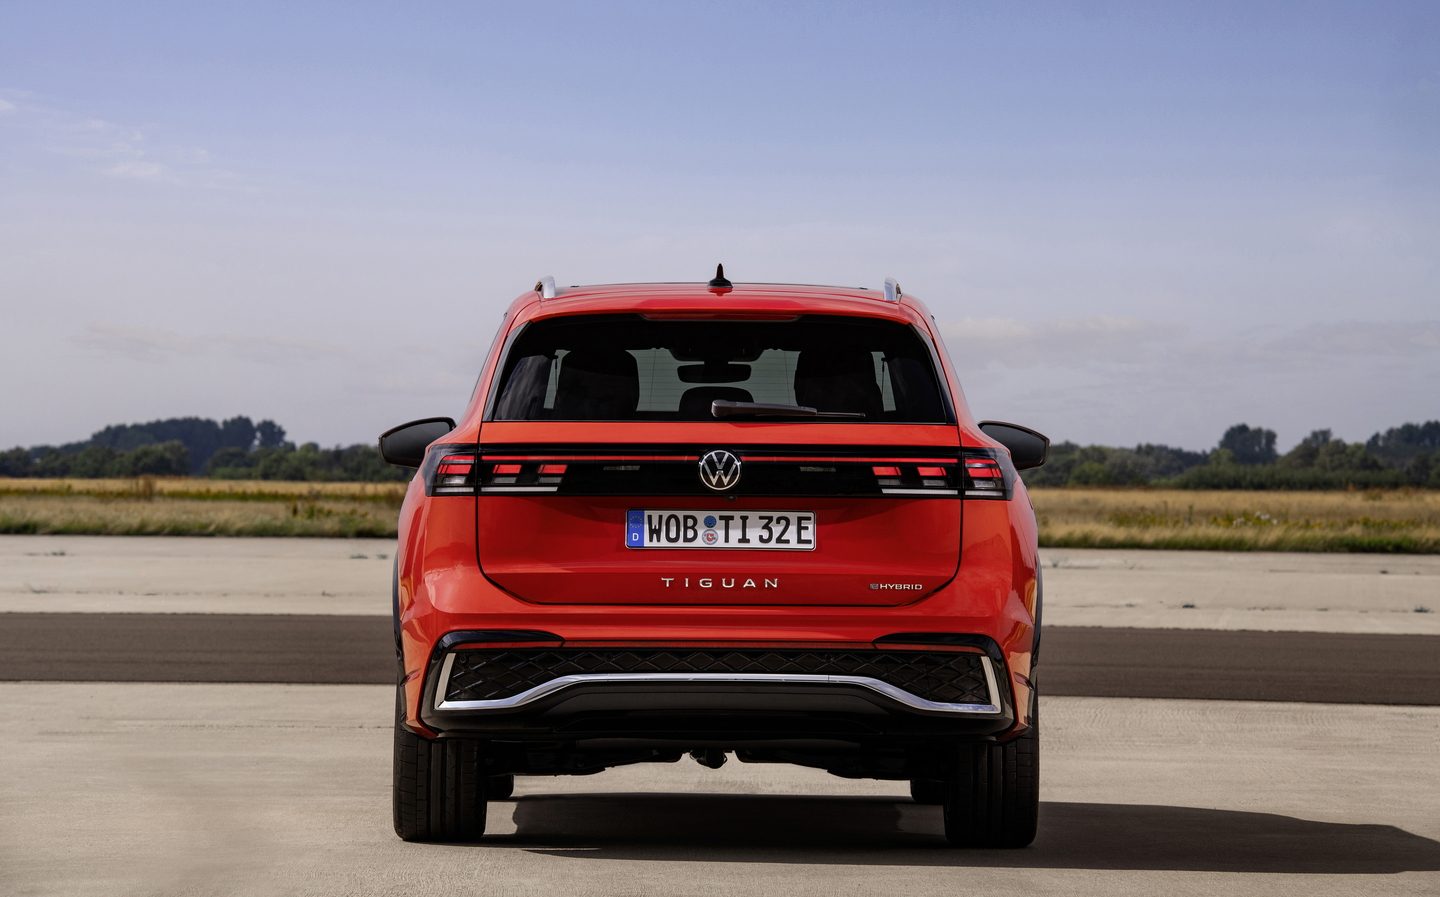 Third-generation Volkswagen Tiguan gets new touchscreen and plug